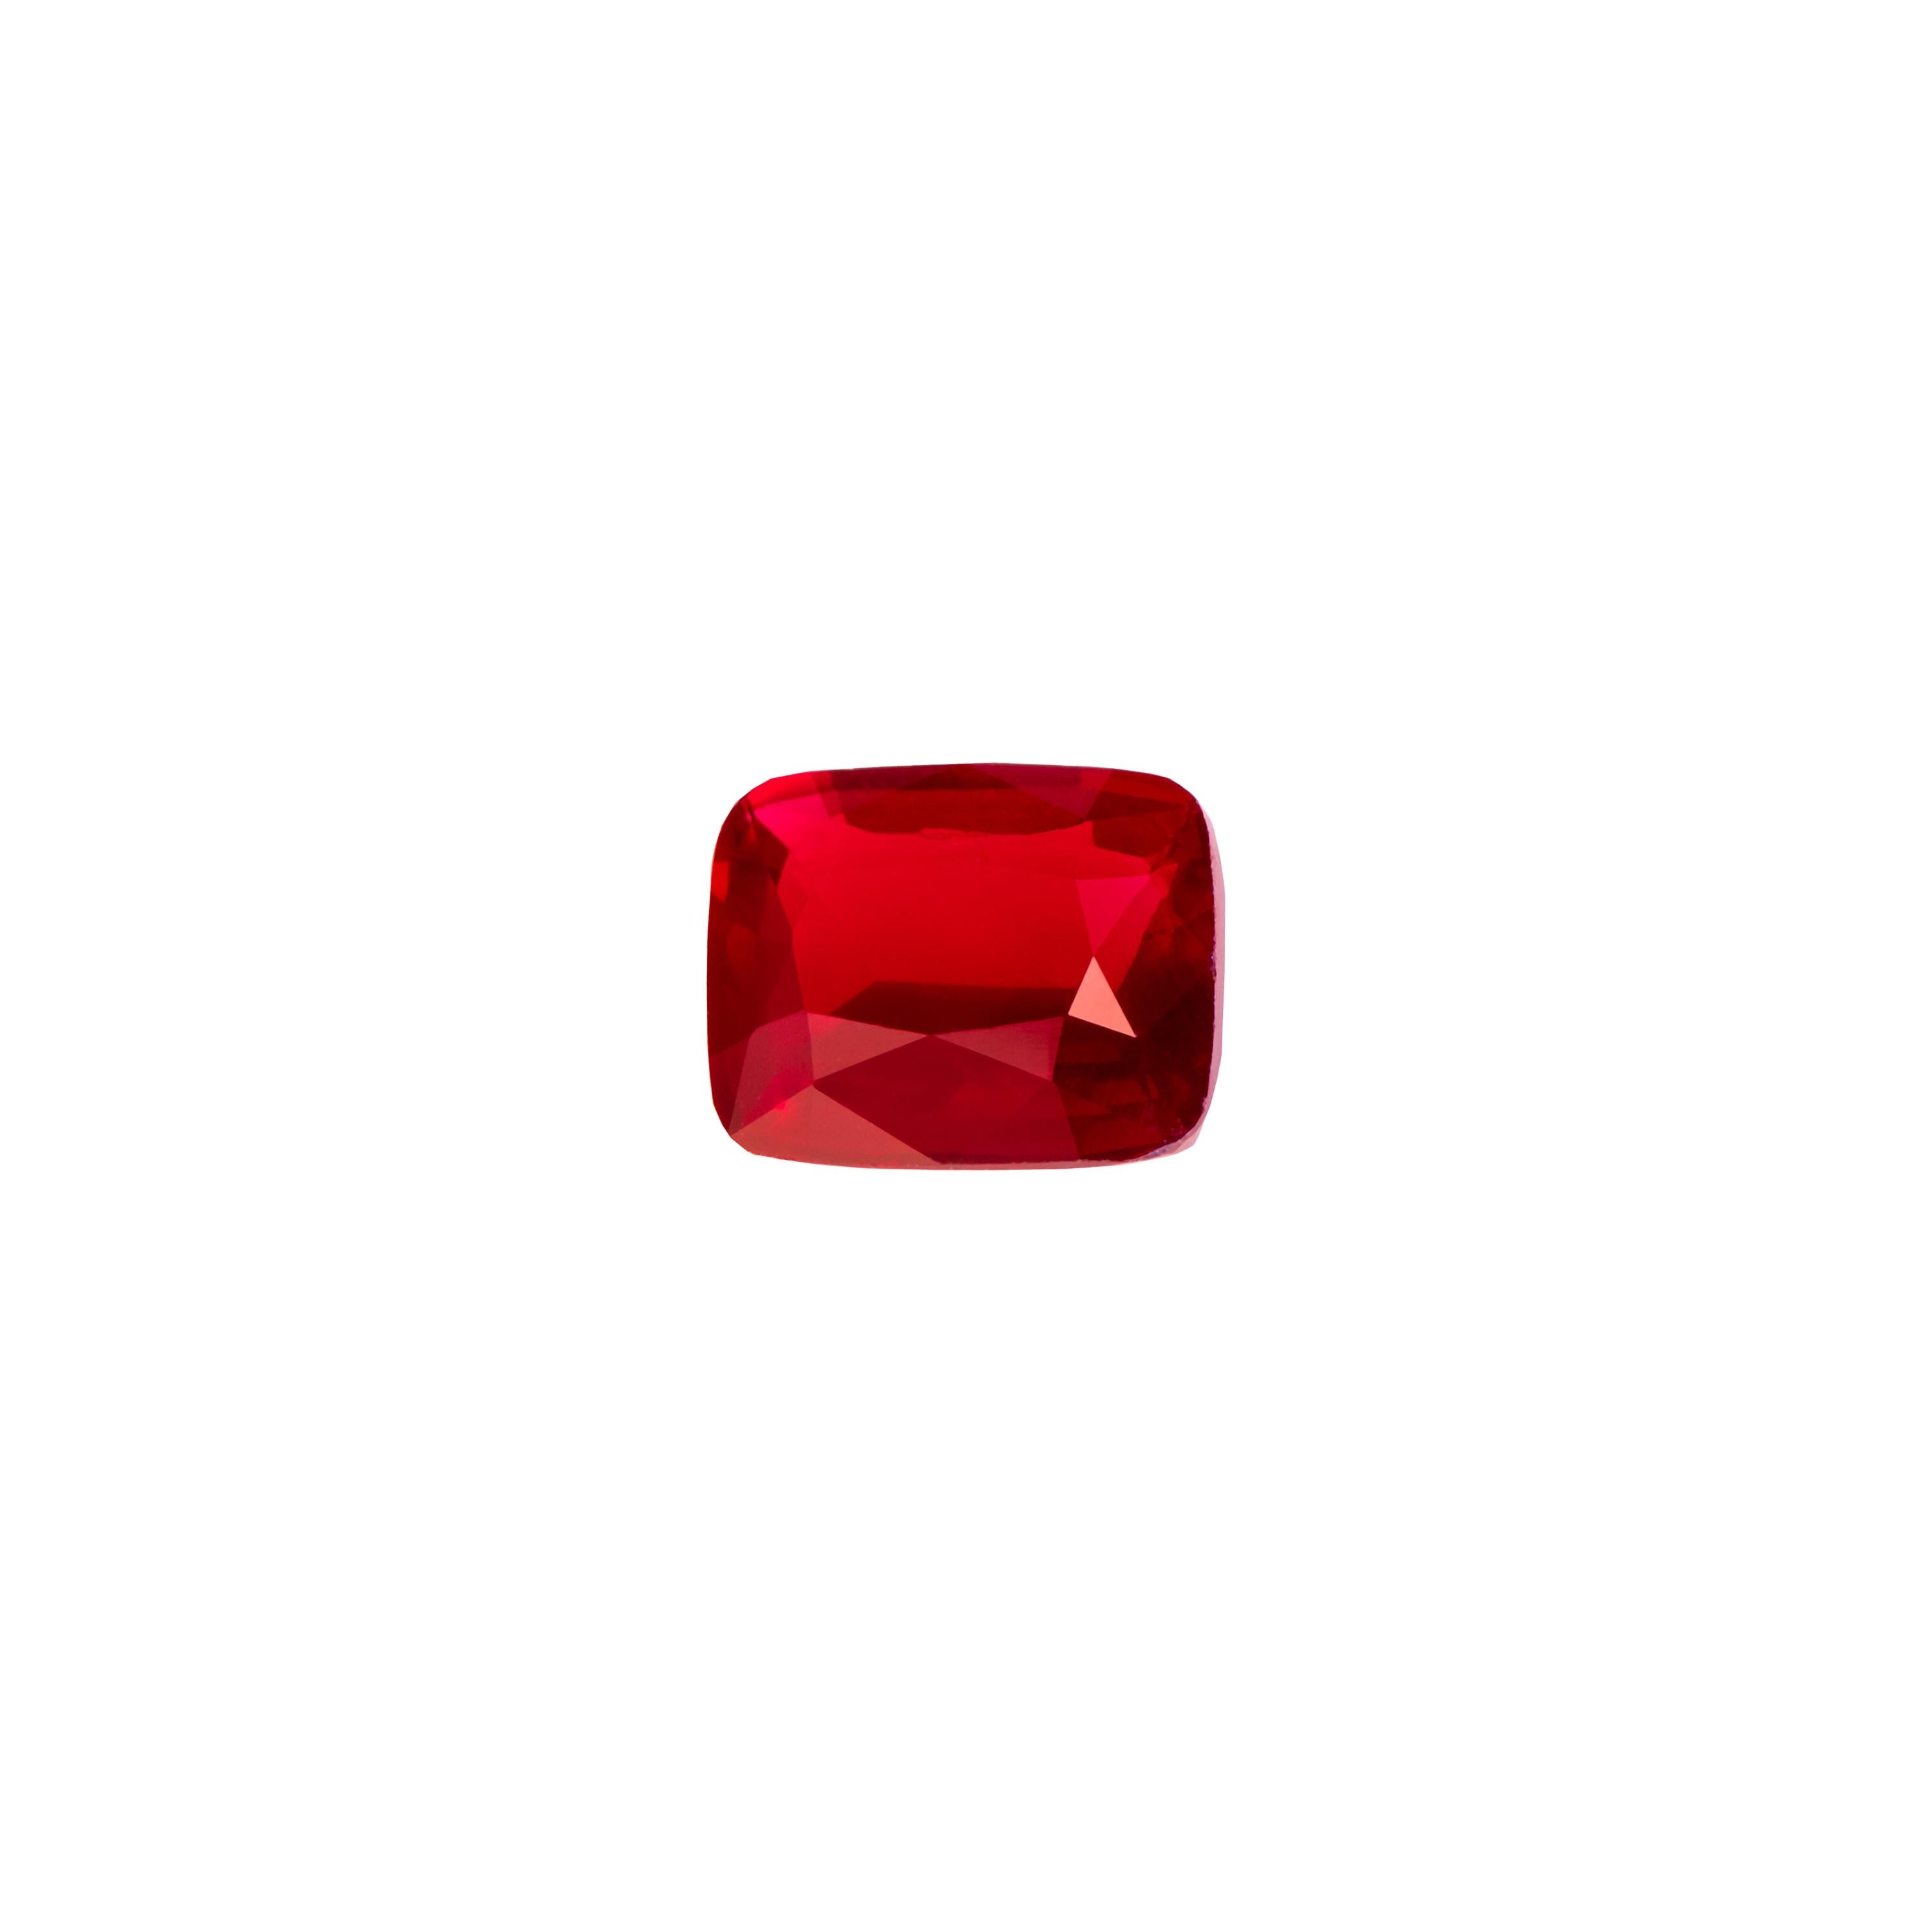 2.05 Carat Vivid Red Ruby, Mozambique, Unheated, Rectangular Cushion Cut